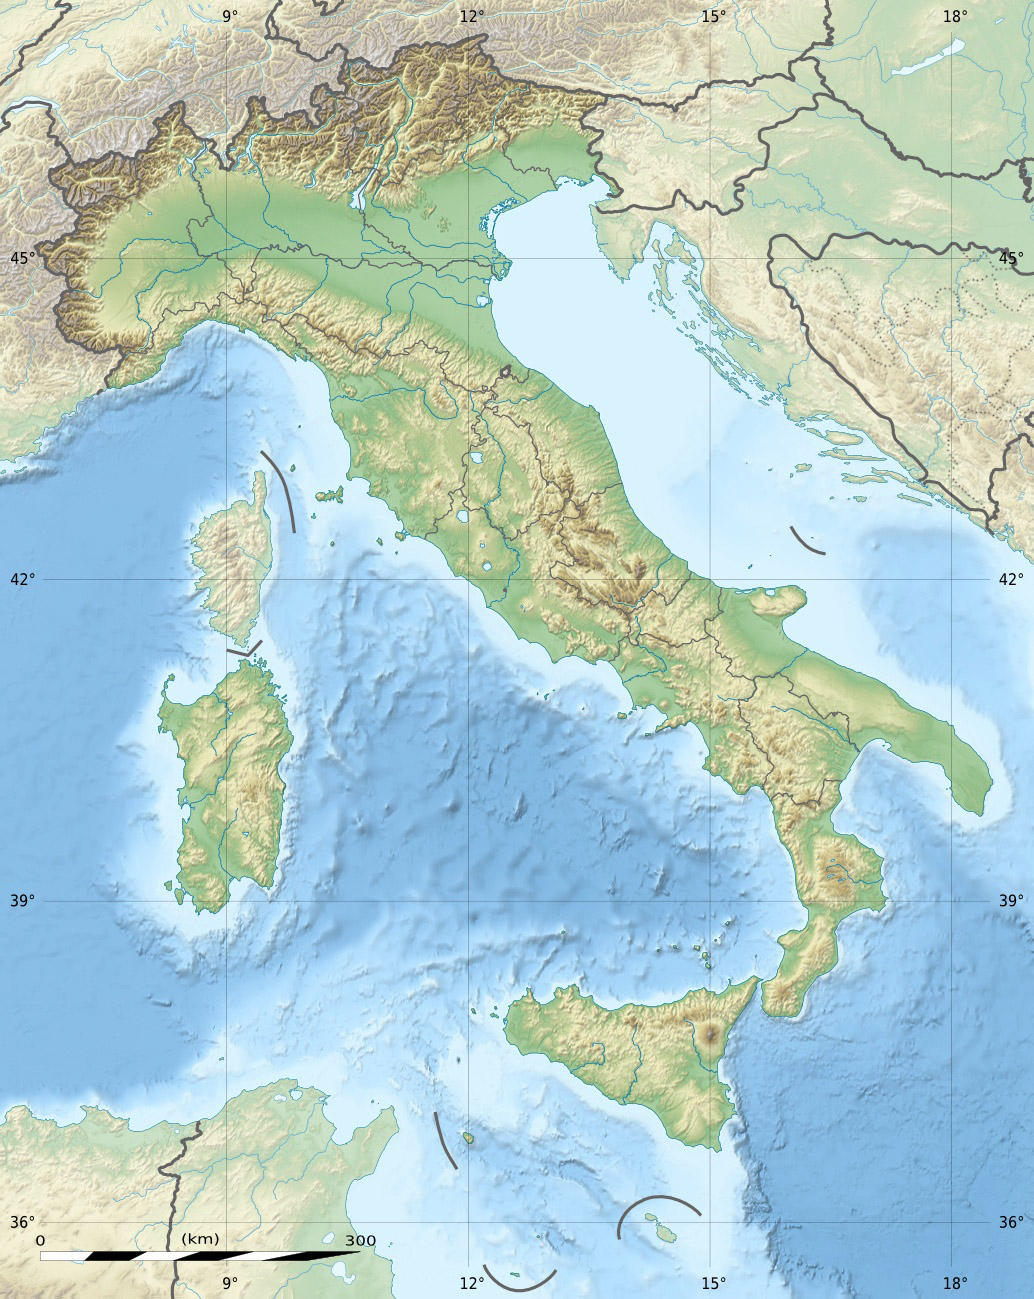 Noclador/sandbox/Italian Fanteria verso il 2000 is located in Italy